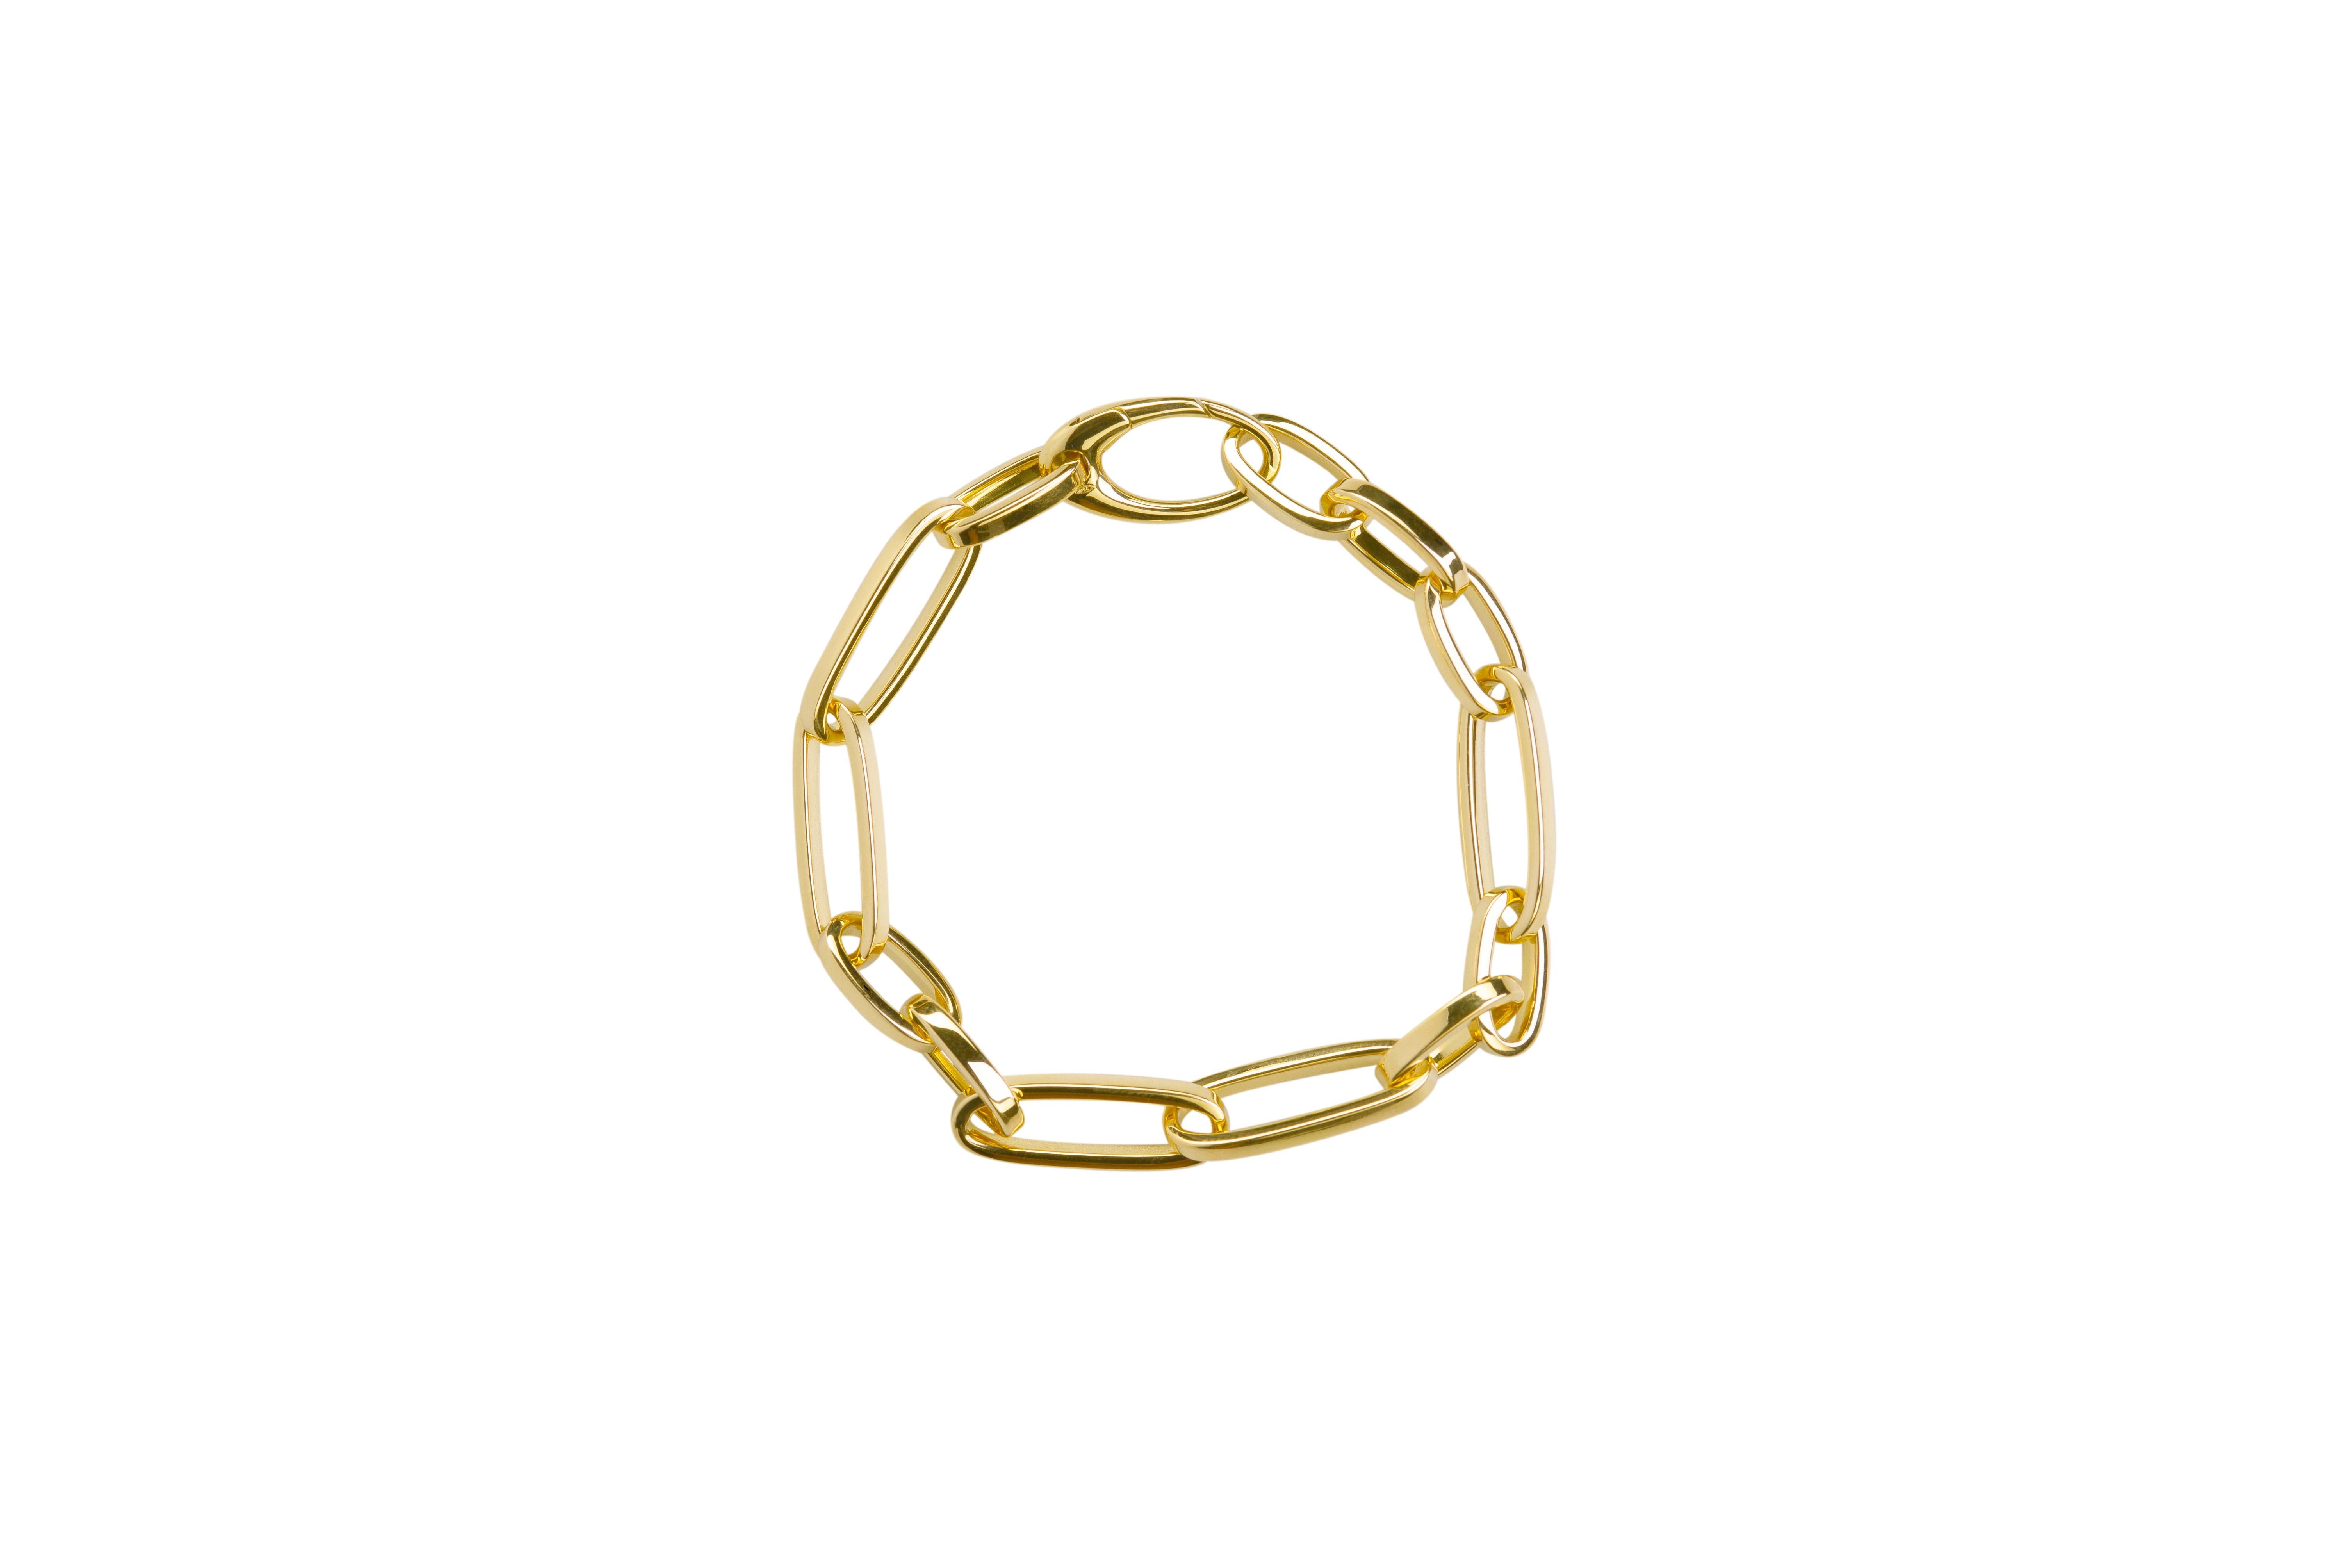 Italian Design 18k Yellow Gold Modern Chain Unisex Link Bracelet Made in Italy For Sale 1